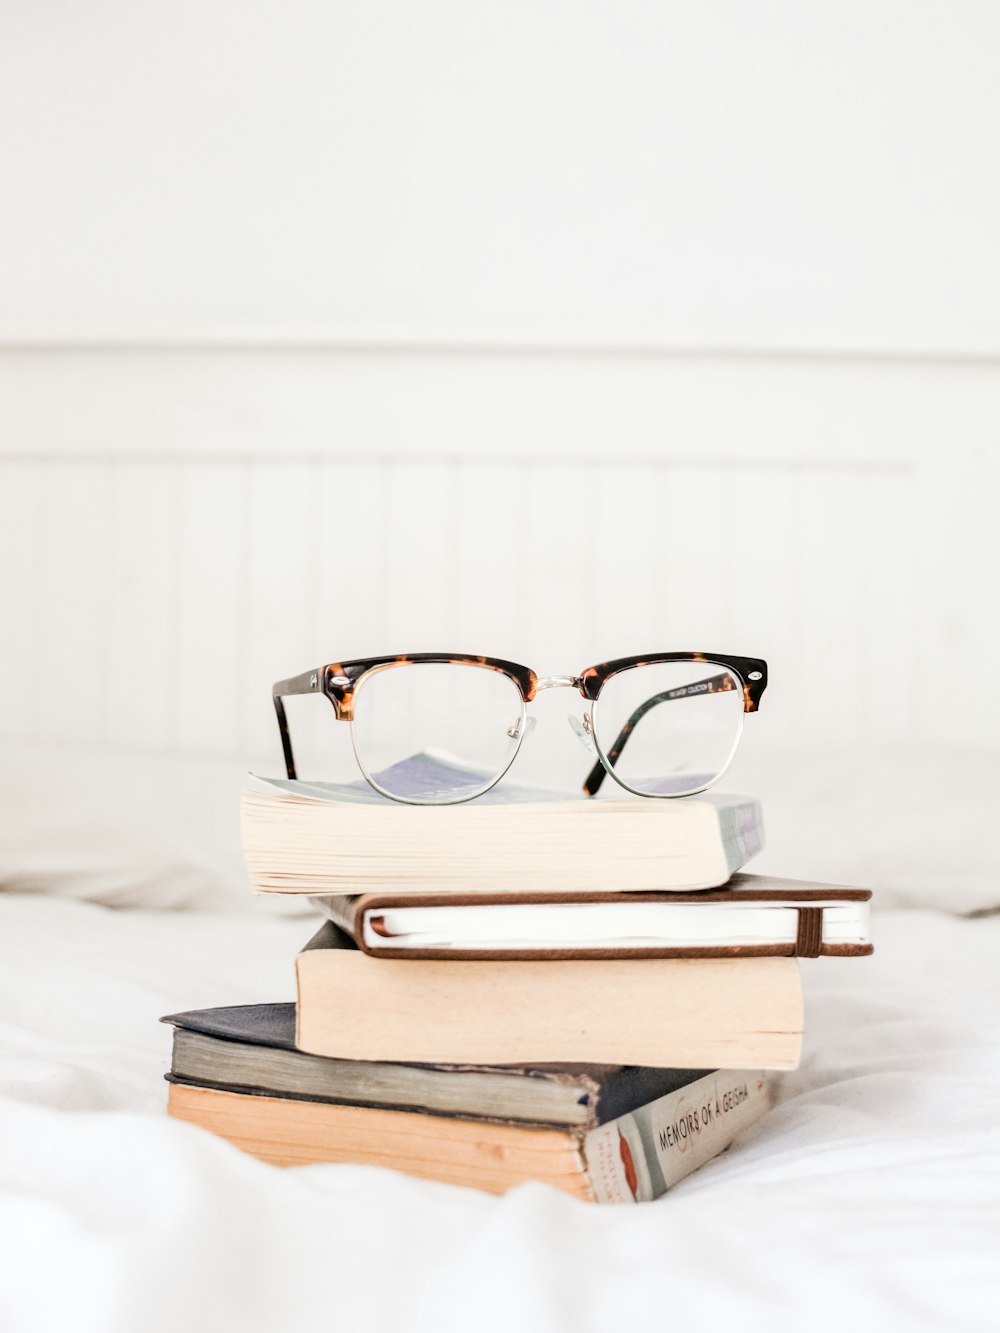 occhiali da vista su libri a pila